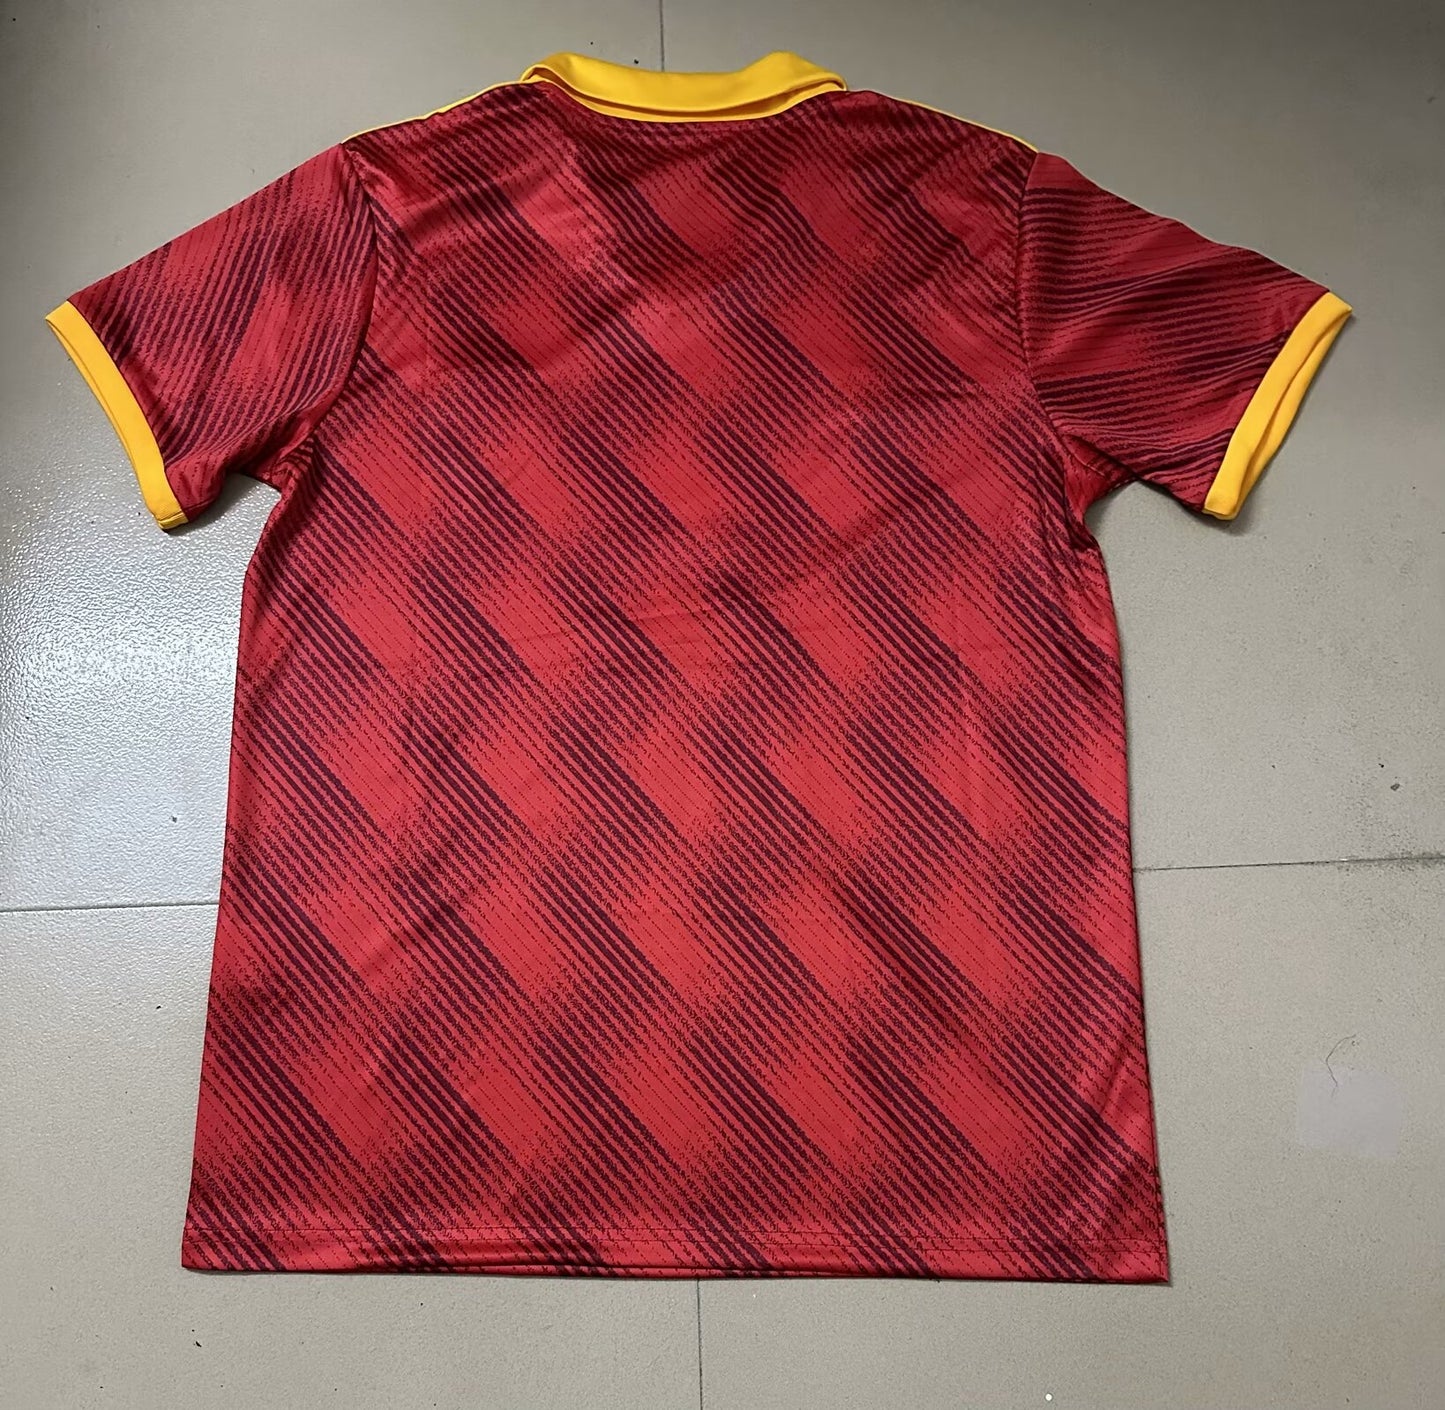 Roma A.S 2024/25 Season Soccer Team Adidas Authentic Replica Home Jersey - Red (Custom)